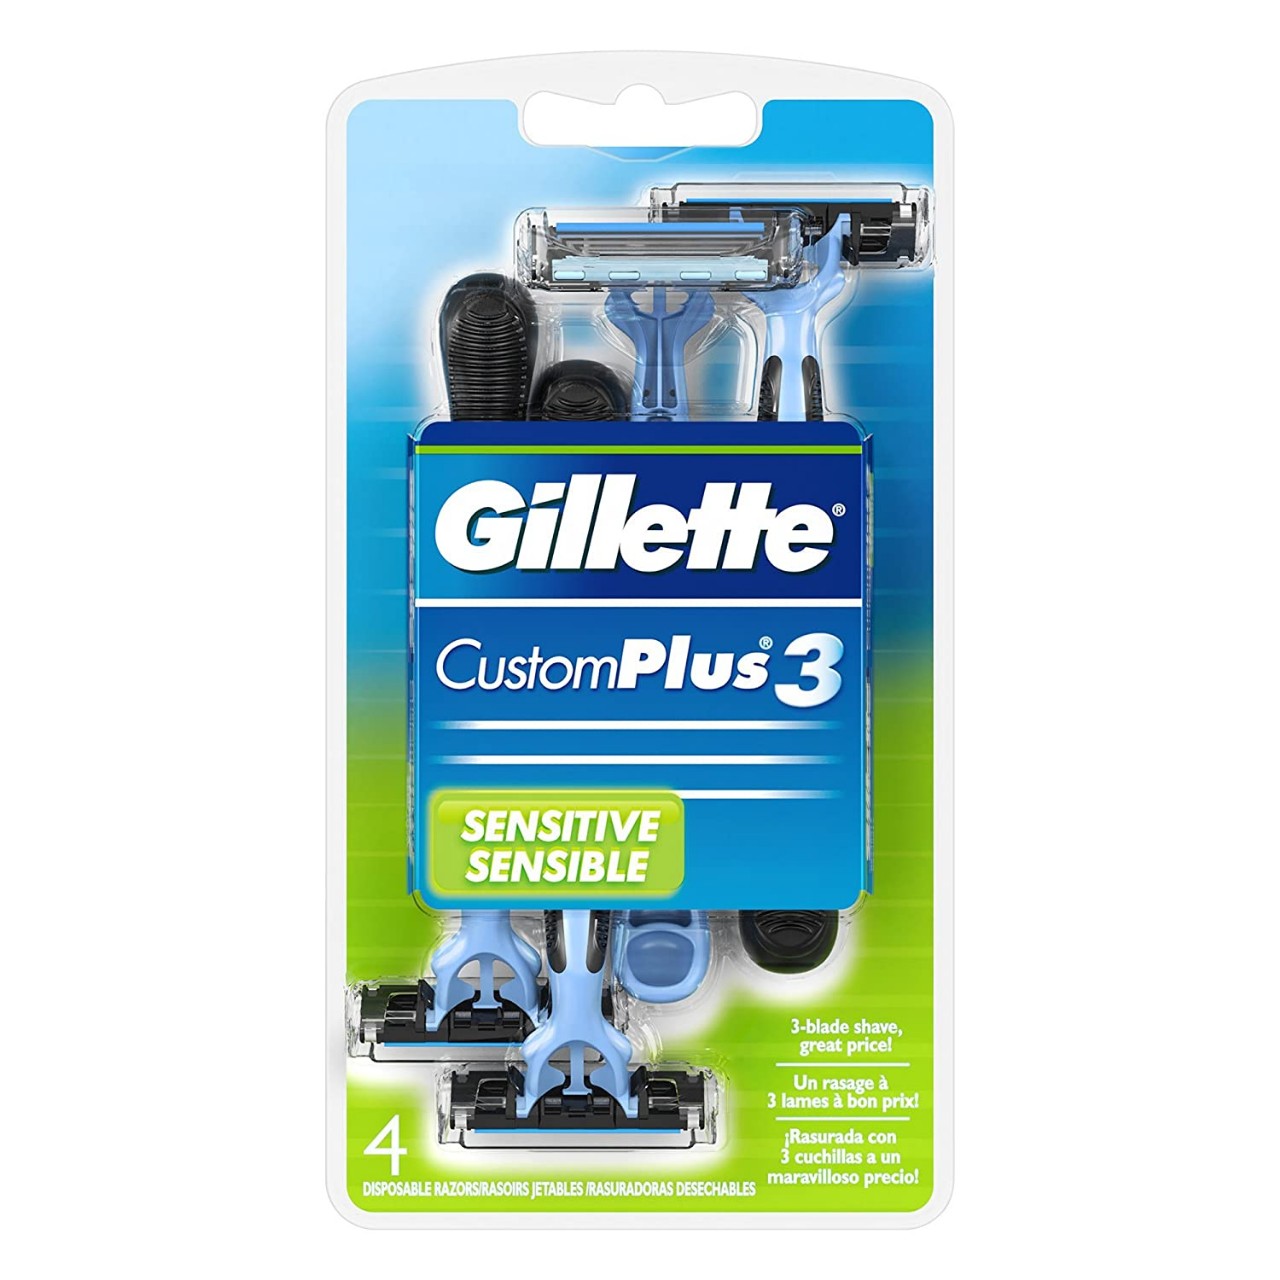 Gillette CustomPlus 3 Disposable Razor, Sensitive, 4 Count, Mens Razors/Blades